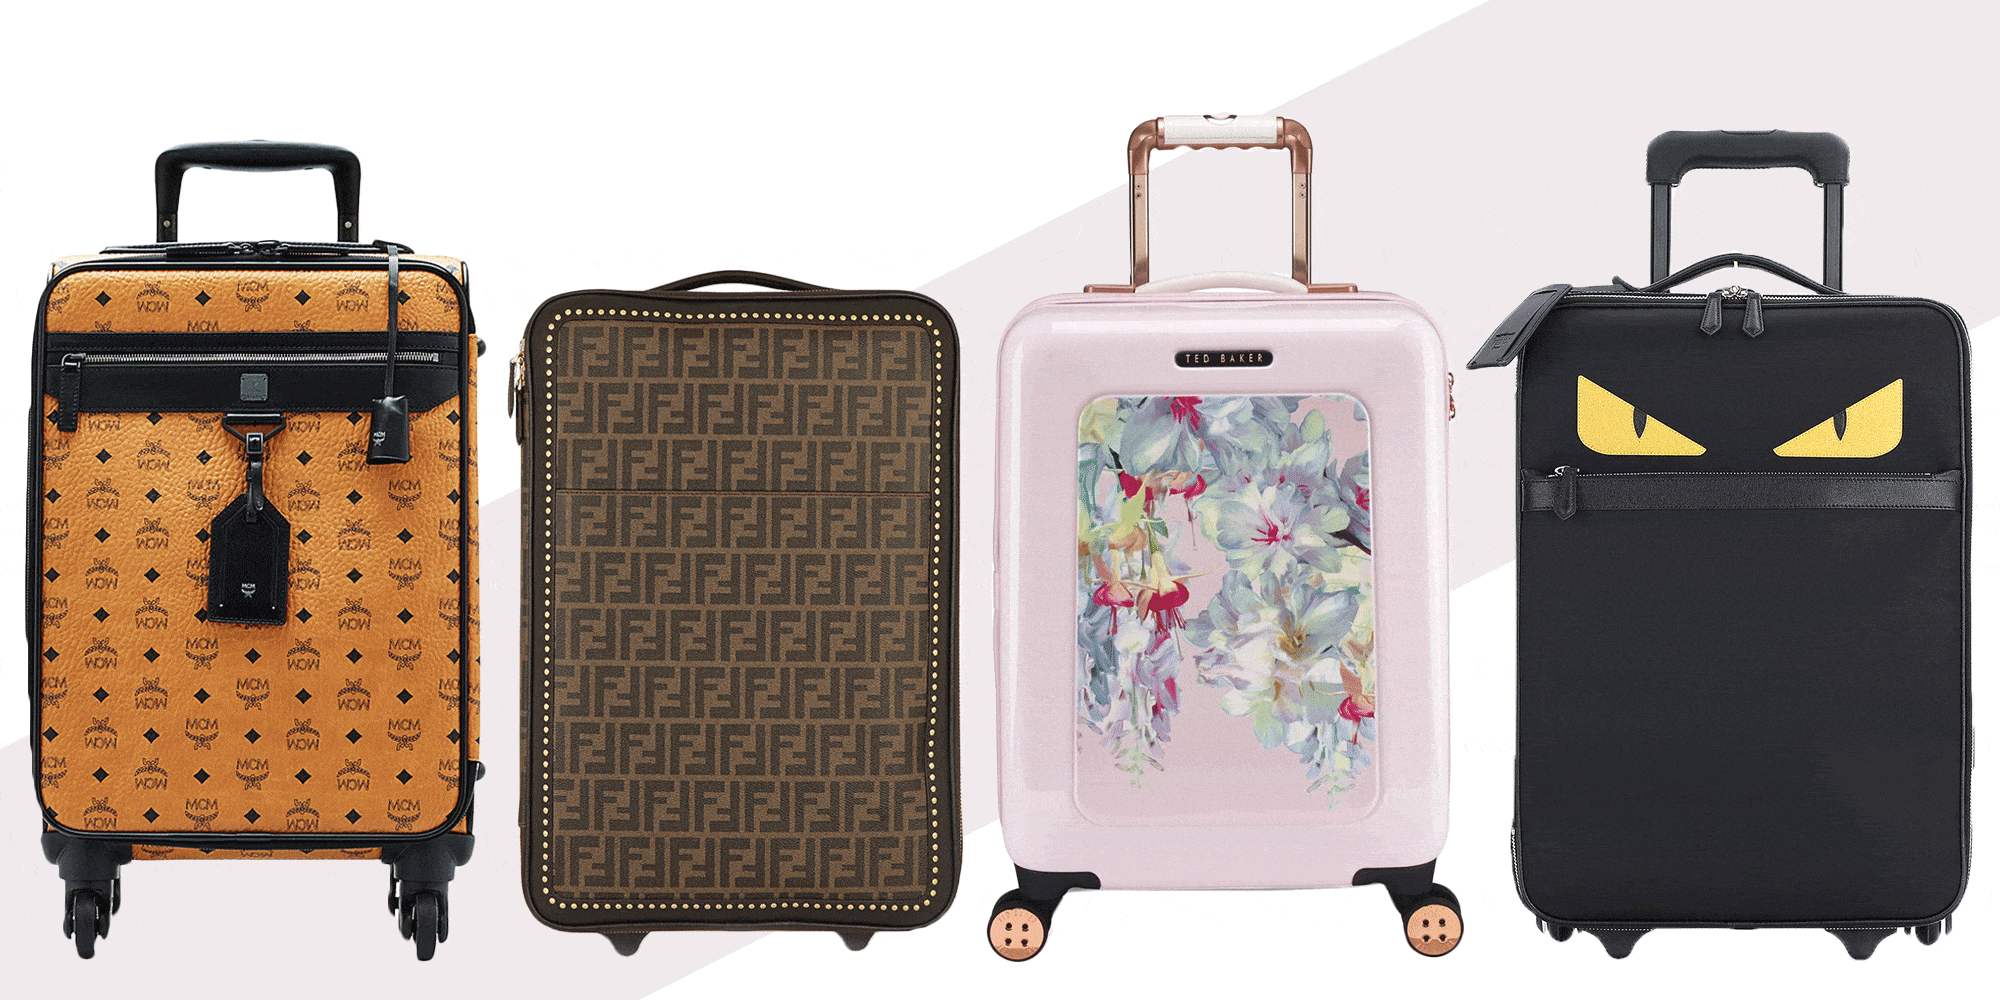 Designer Handbags & Travel Luggage